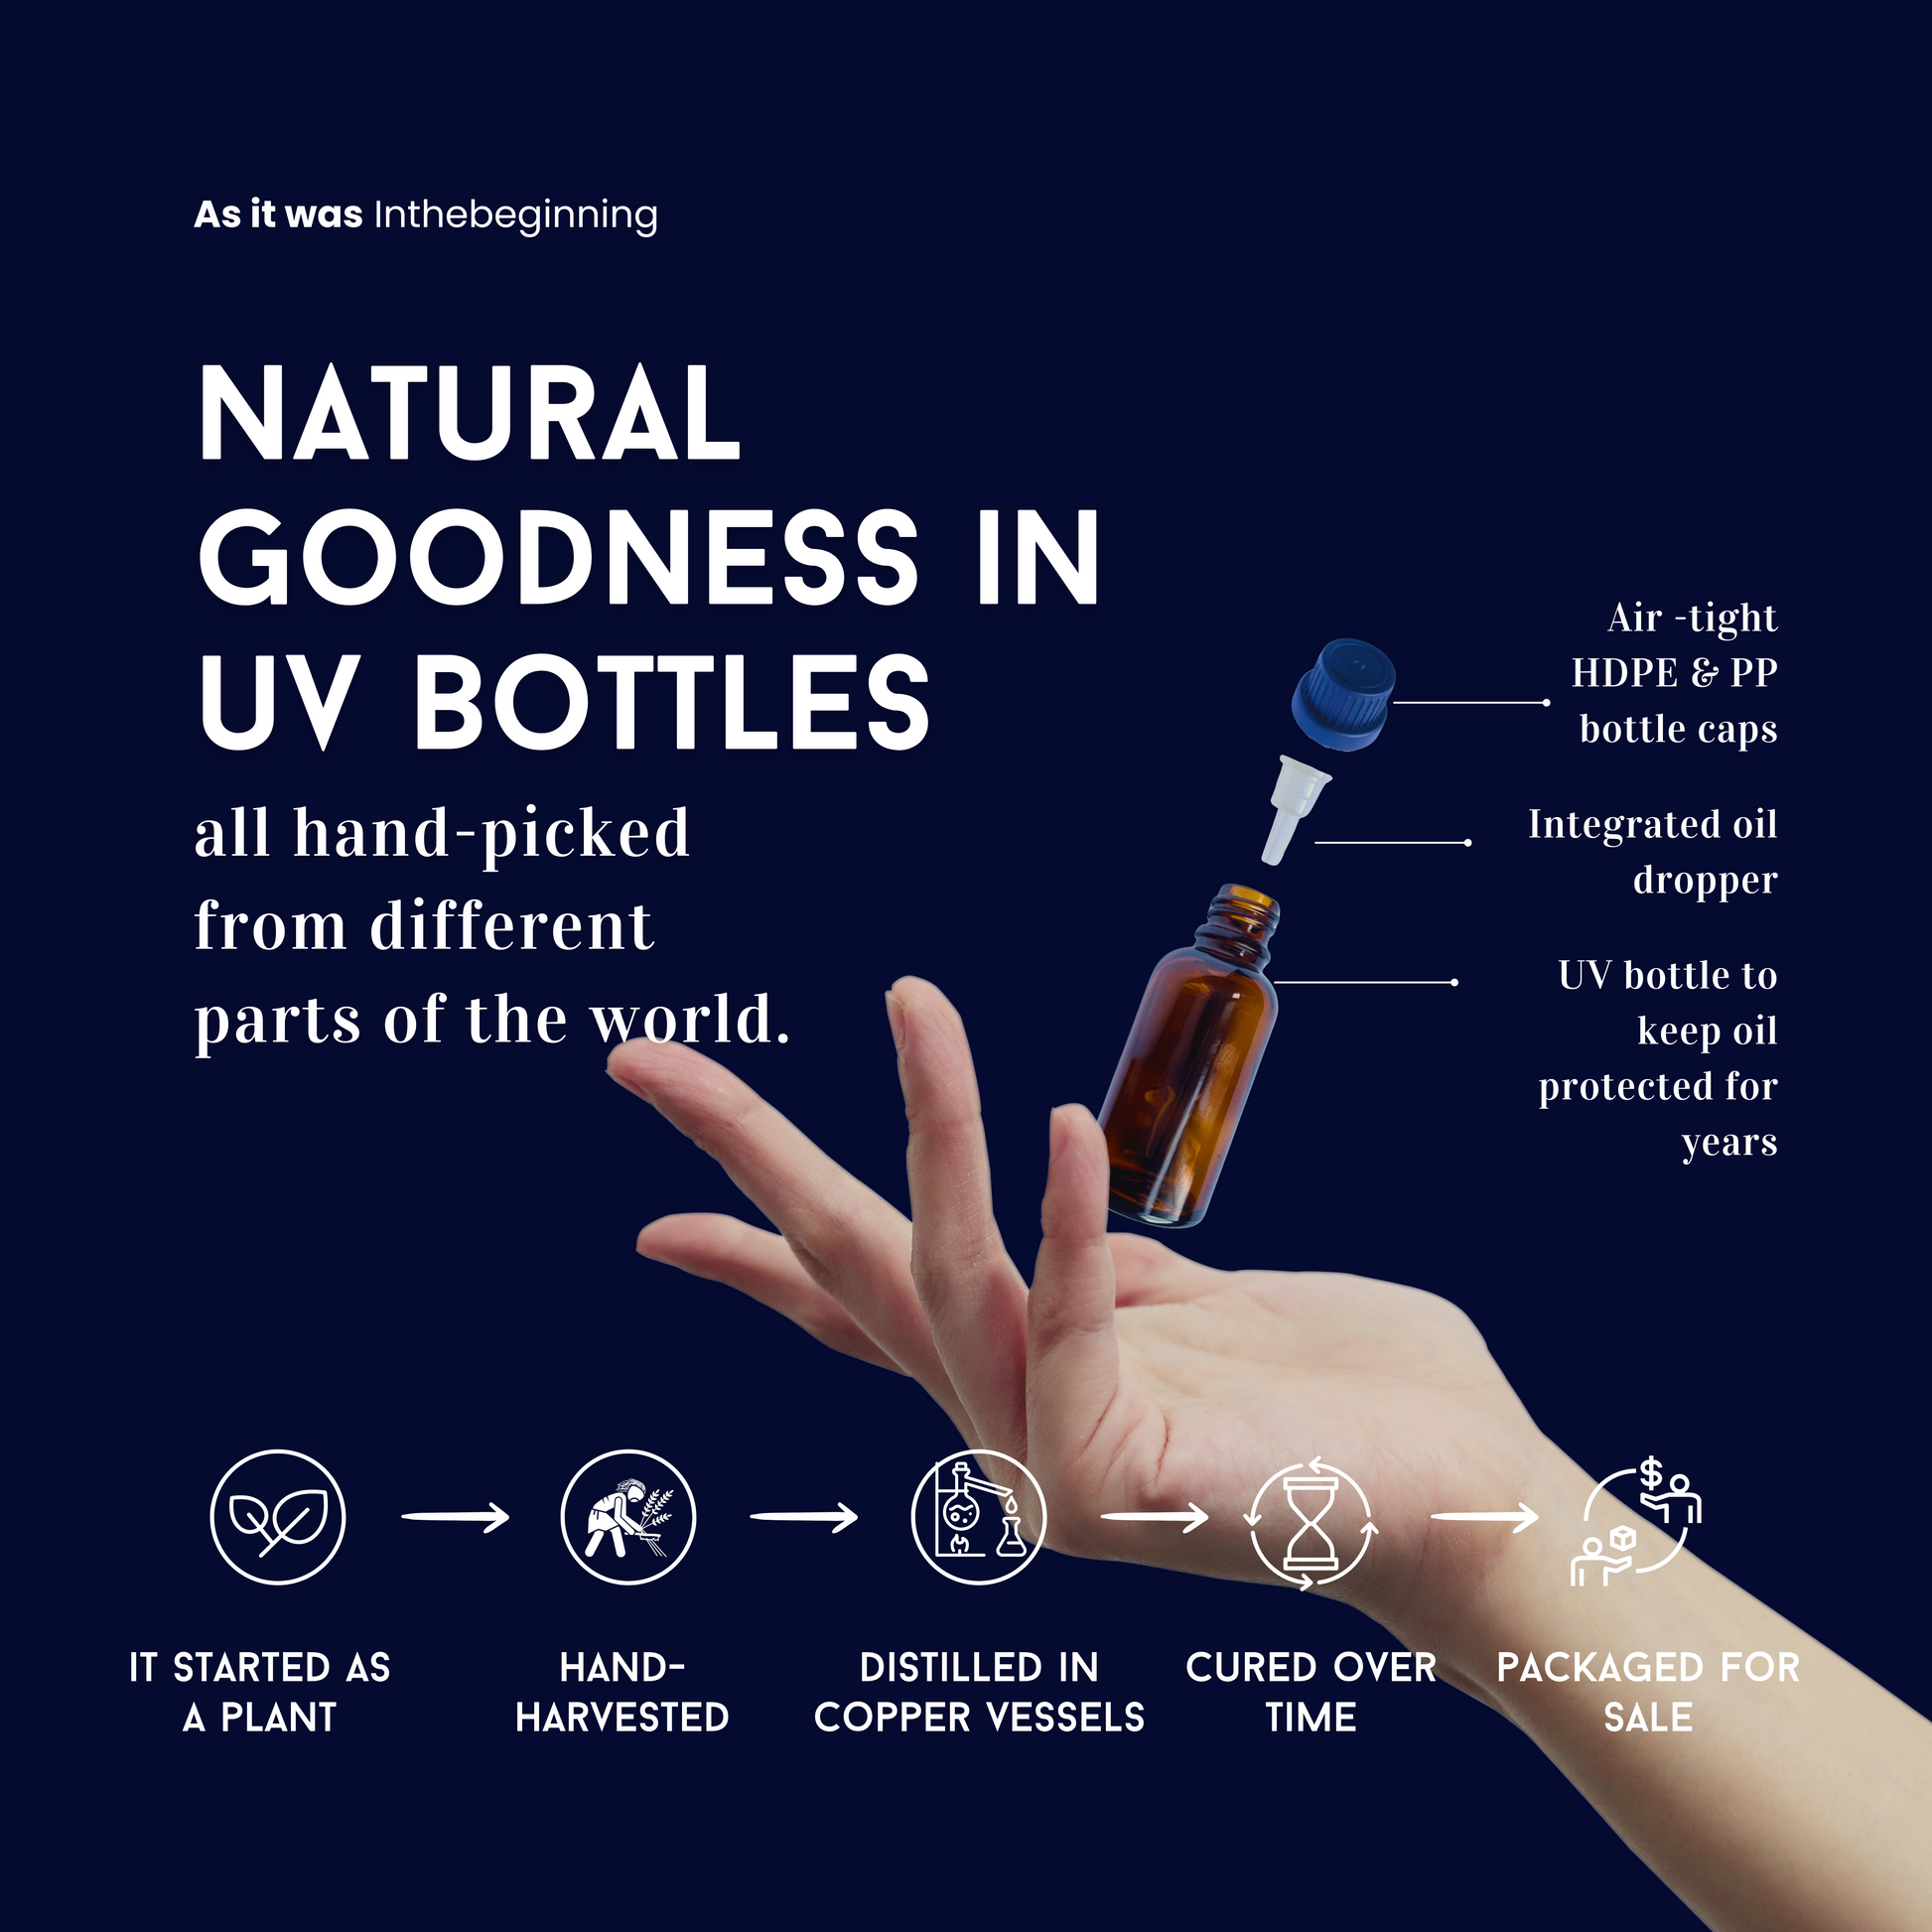 Organic Himalayan CedarWood  Essential Oil | 30ml / 1oz UV Bottle | Pure Woody Oil | Unblended | Aromatherapy | Vegan | Spirituality| Nature Heals - ITBO Green